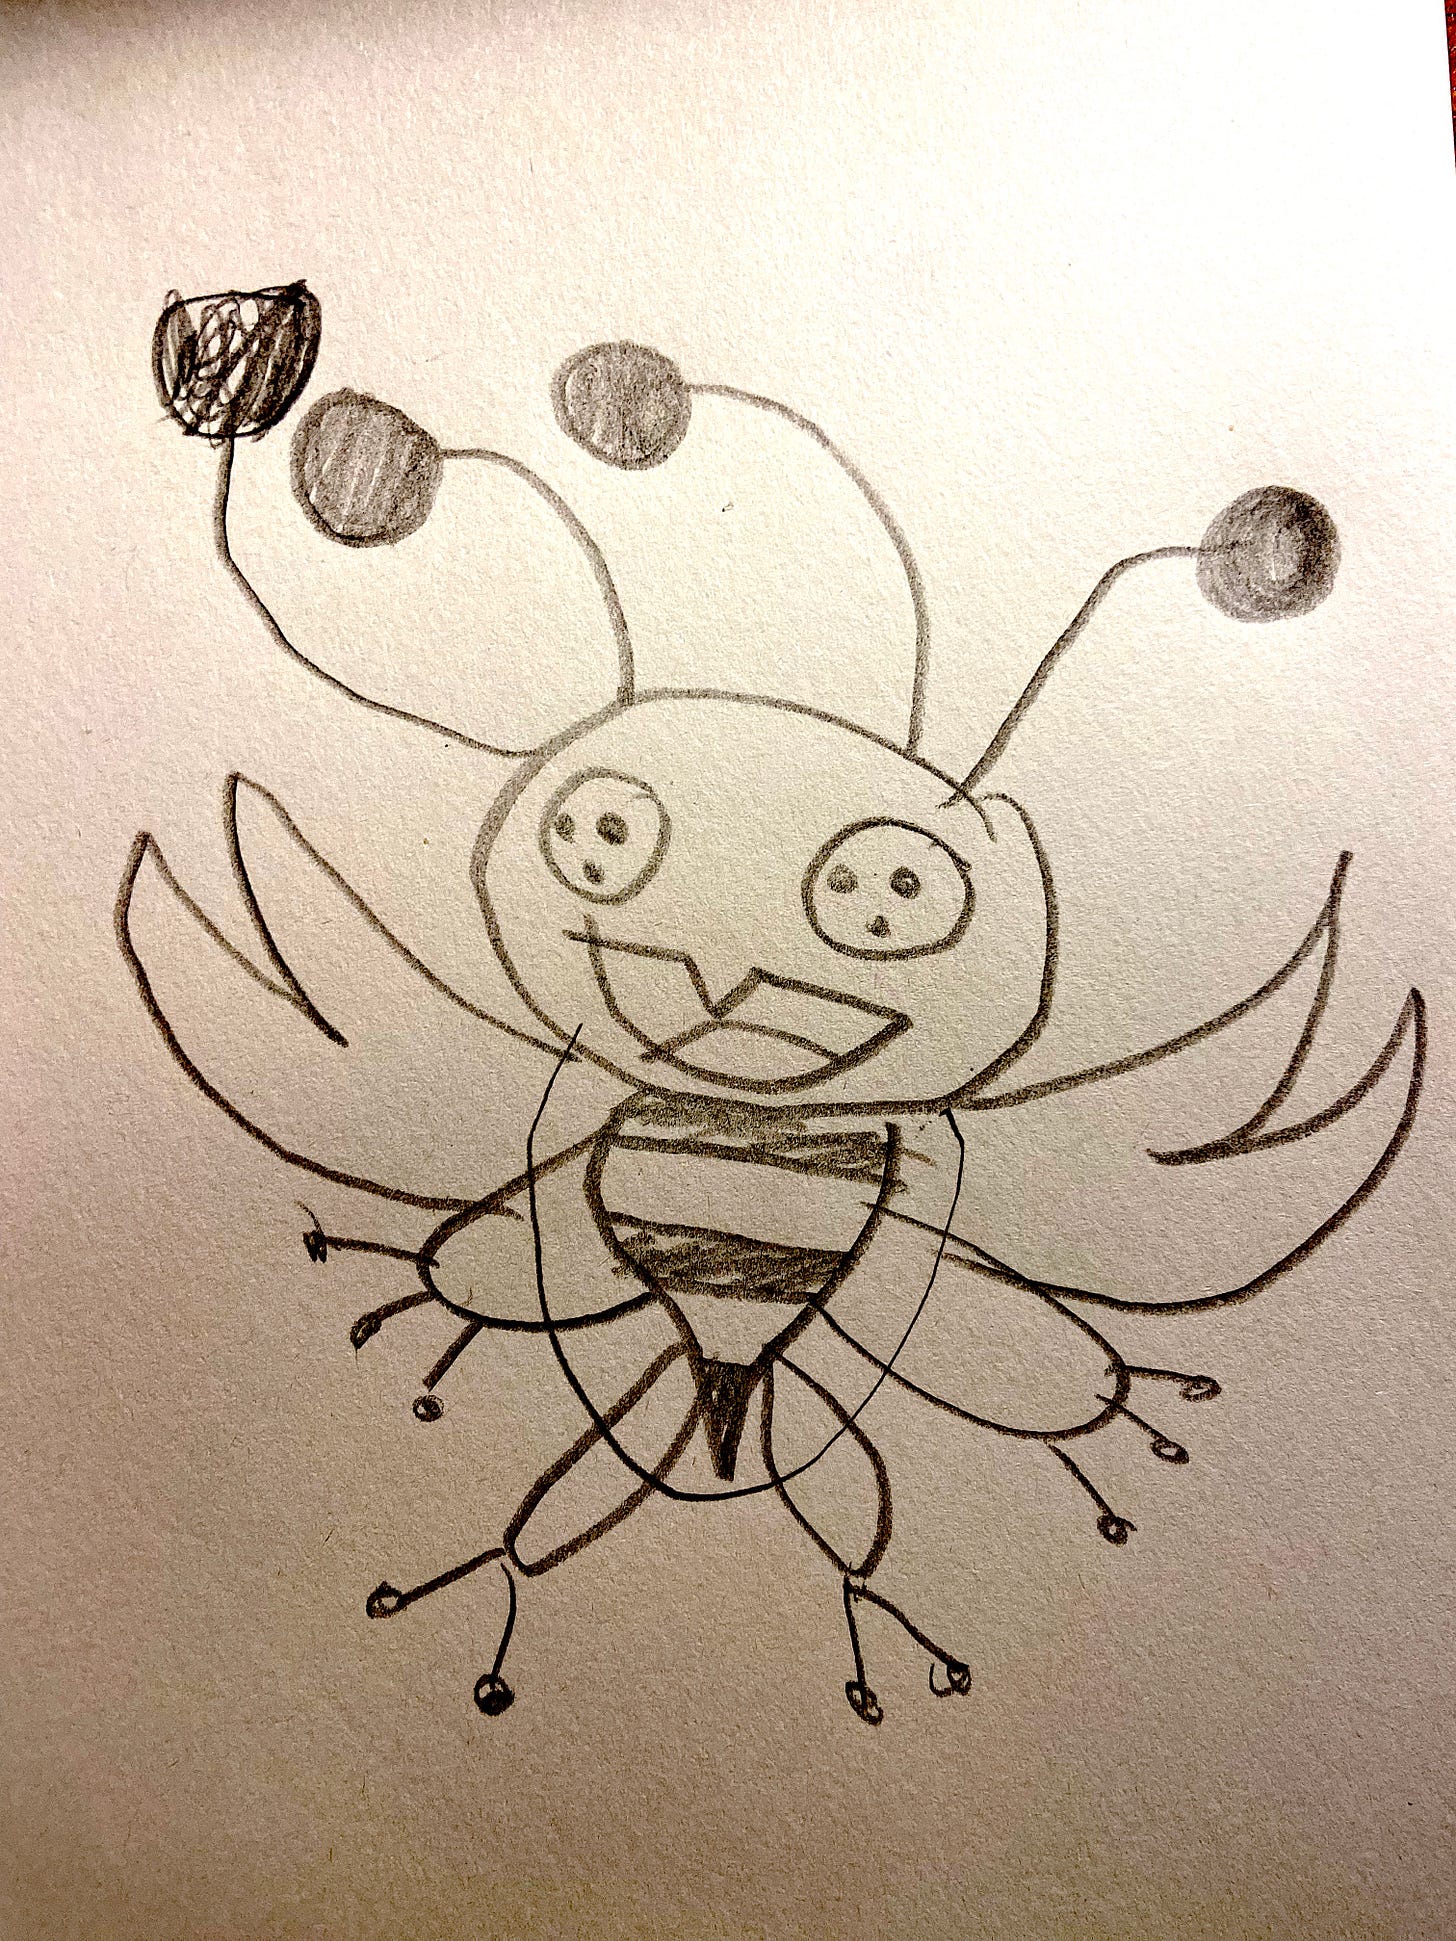 The original Bee-folk illustration